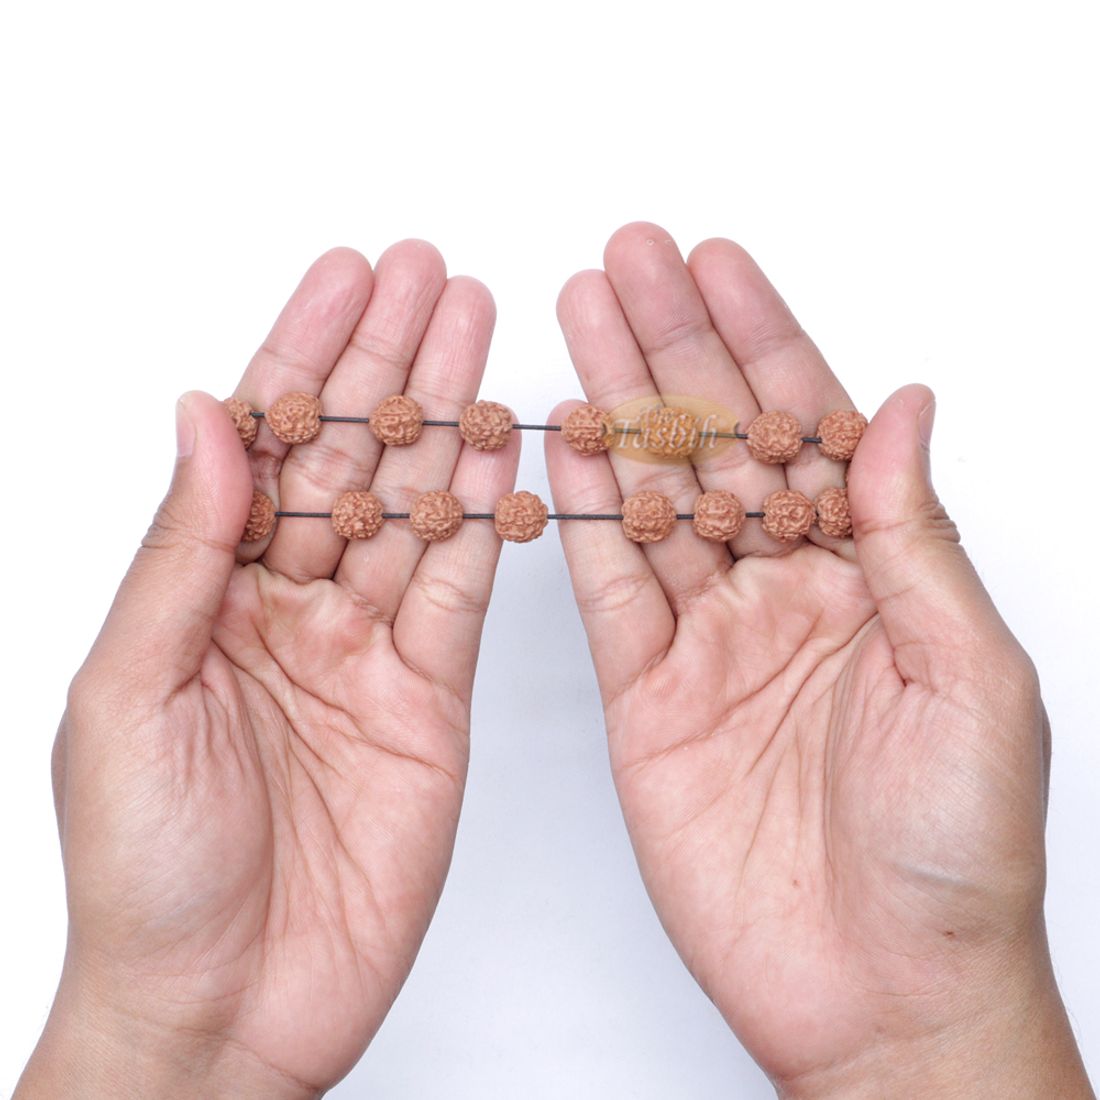 Rudraksha Beaded Bracelet – 10mm Jenitri Seed Healing Prayer Beads with 19 Beads on Elastic Cord